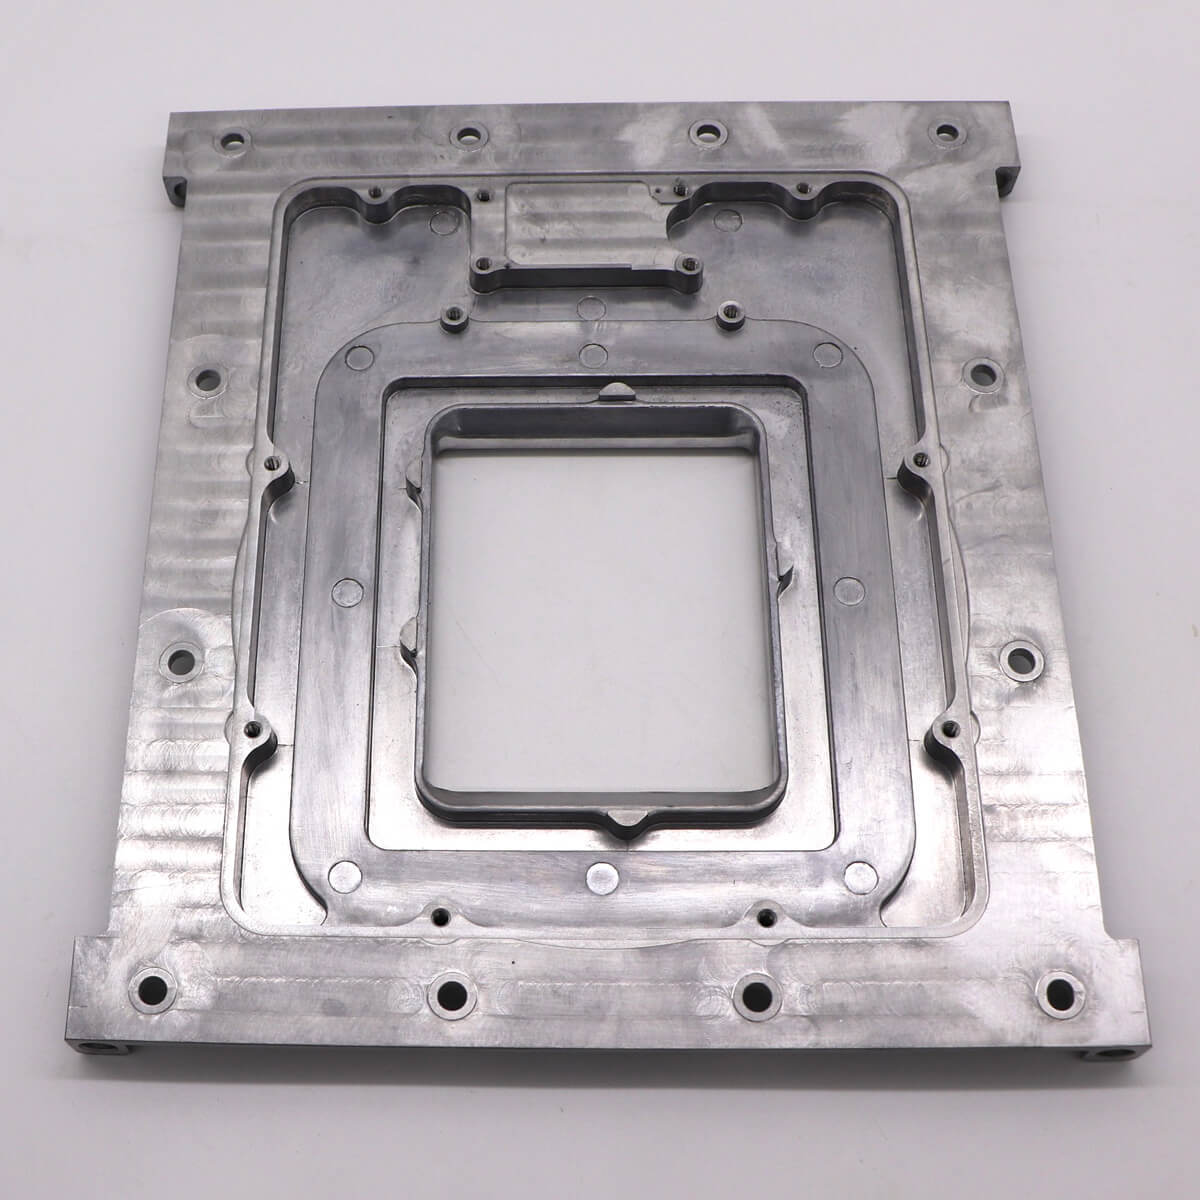 Xavier aluminum alloy cnc milling machine parts long-lasting durability die casting